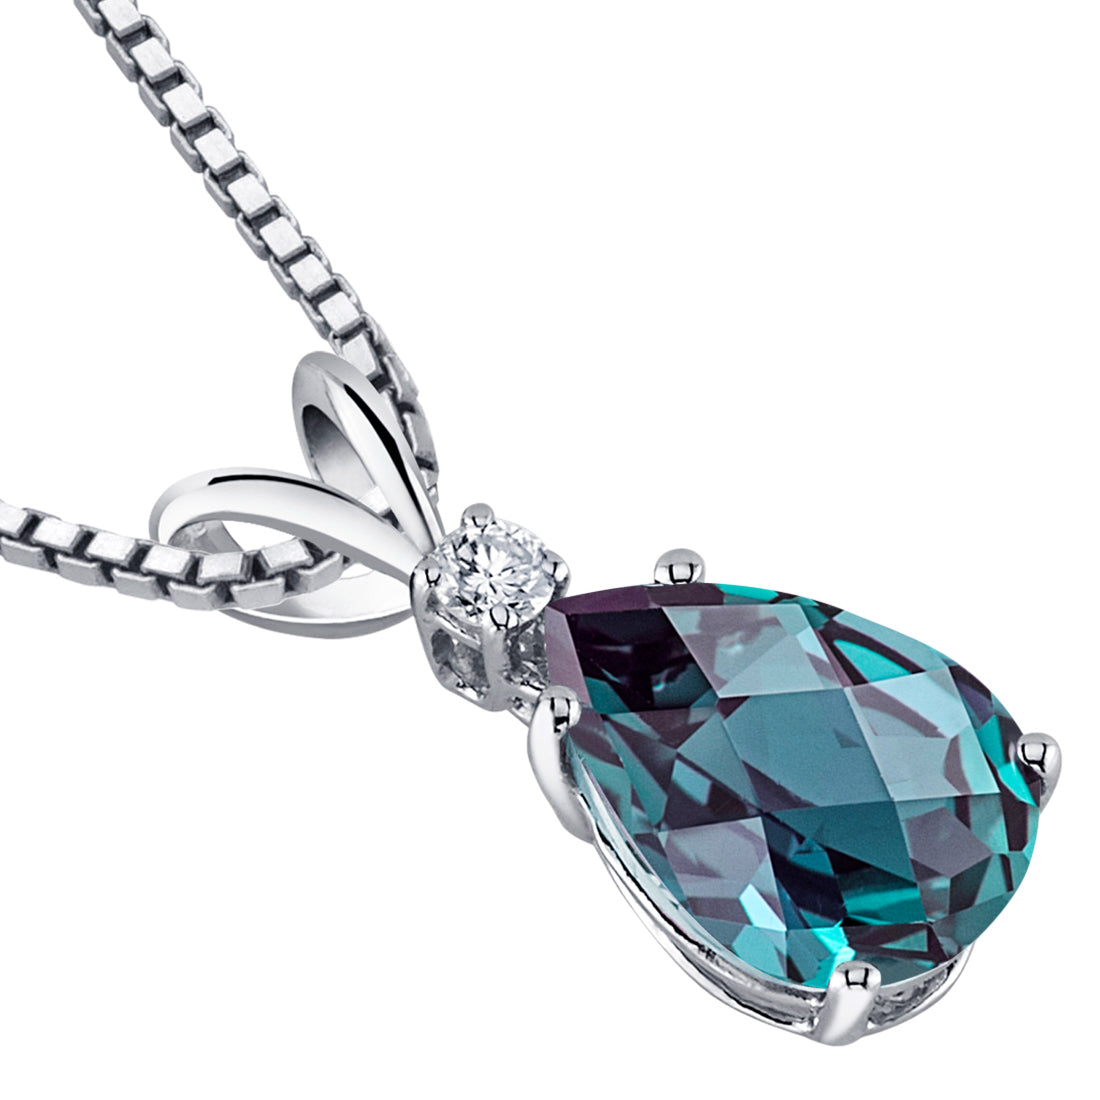 Alexandrite necklace pendant Natural stone Color Change 14karat Gold  Diamond | eBay